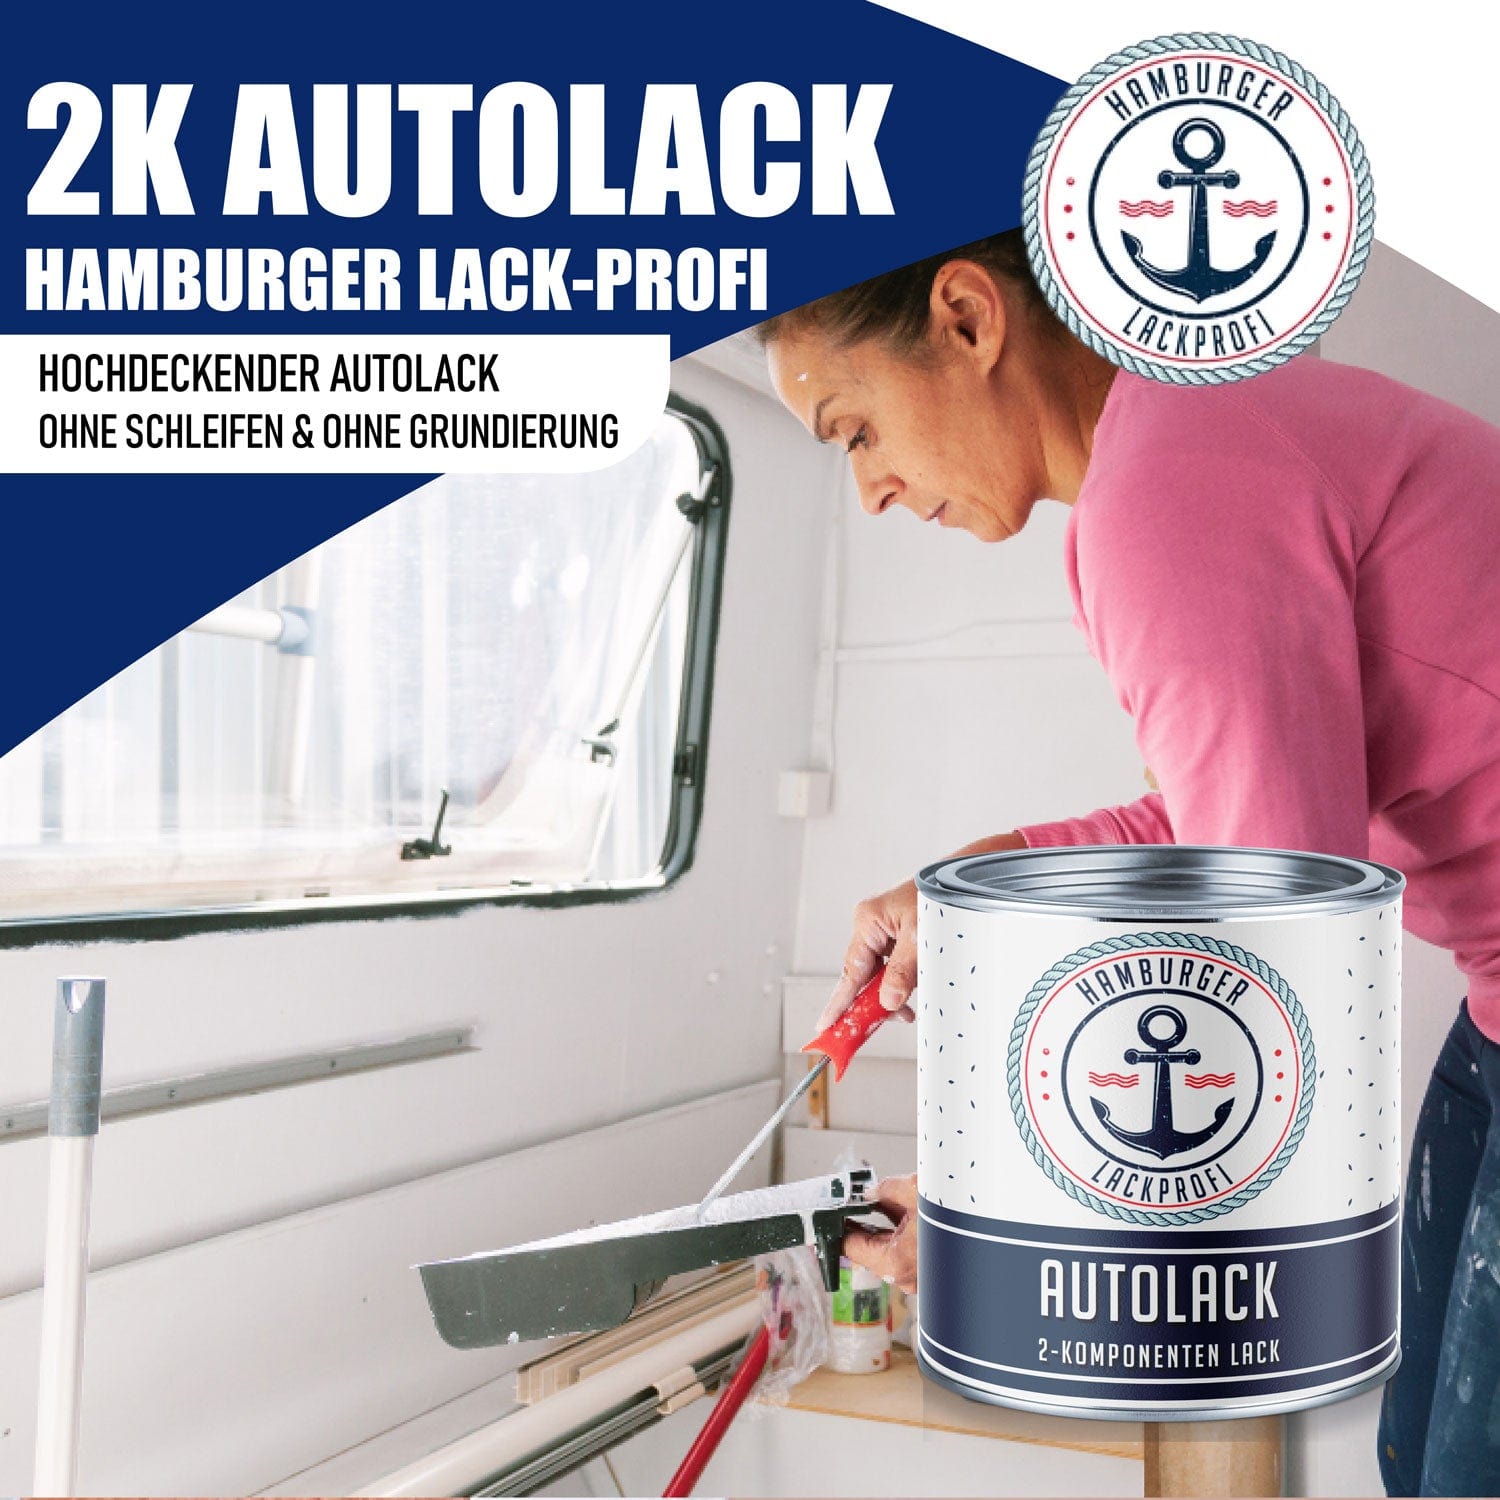 Hamburger Lack-Profi Lacke & Beschichtungen Hamburger Lack-Profi 2K Autolack in Reinweiß RAL 9010 mit Lackierset (X300) & Verdünnung (1 L) - 30% Sparangebot